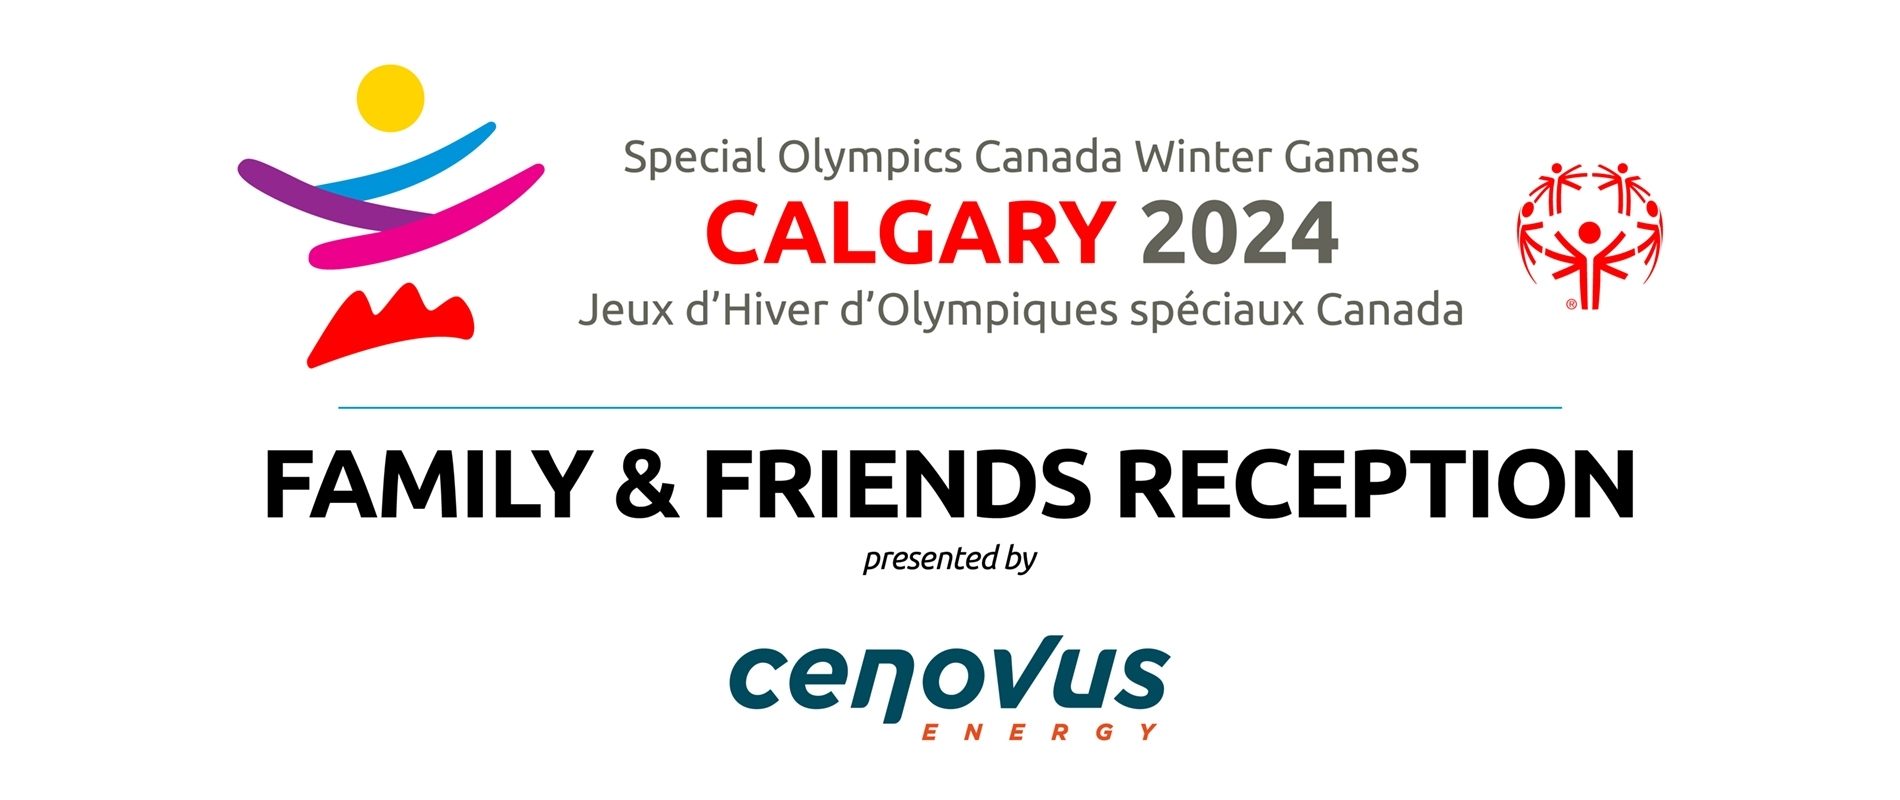 Special Olympics Canada Winter Games Calgary 2024 Live Stream!